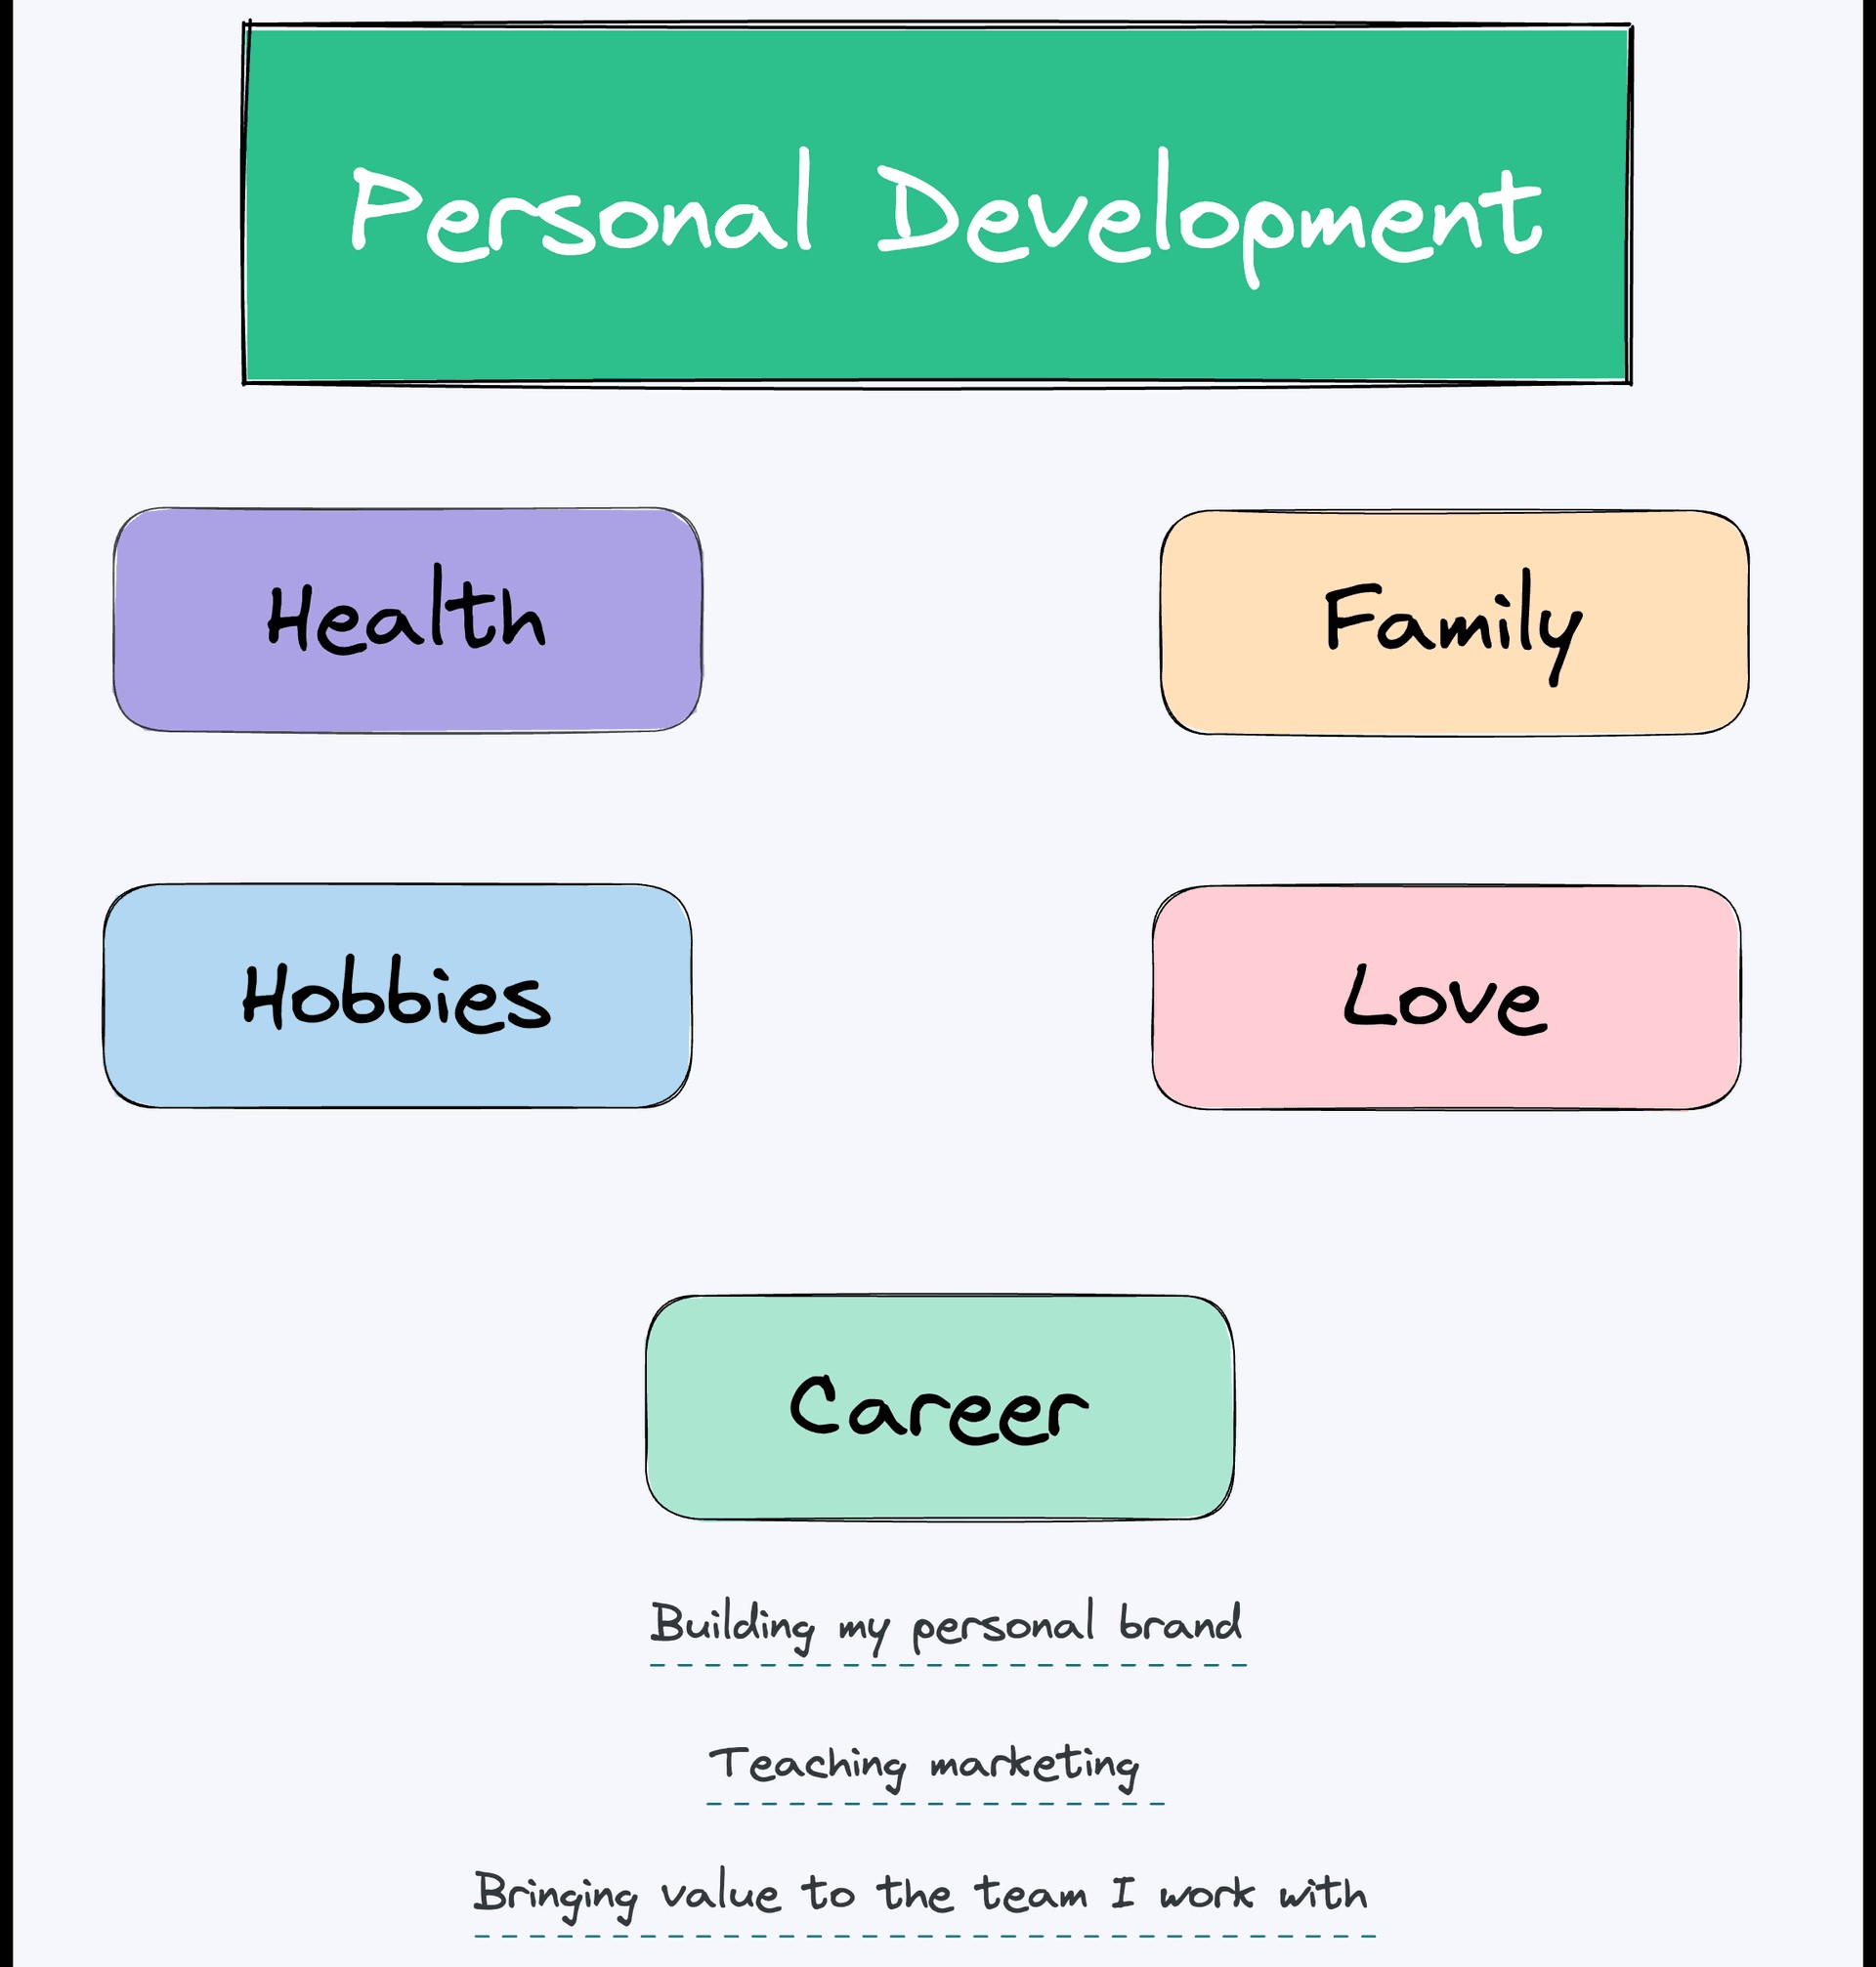 Health and personal development strategies